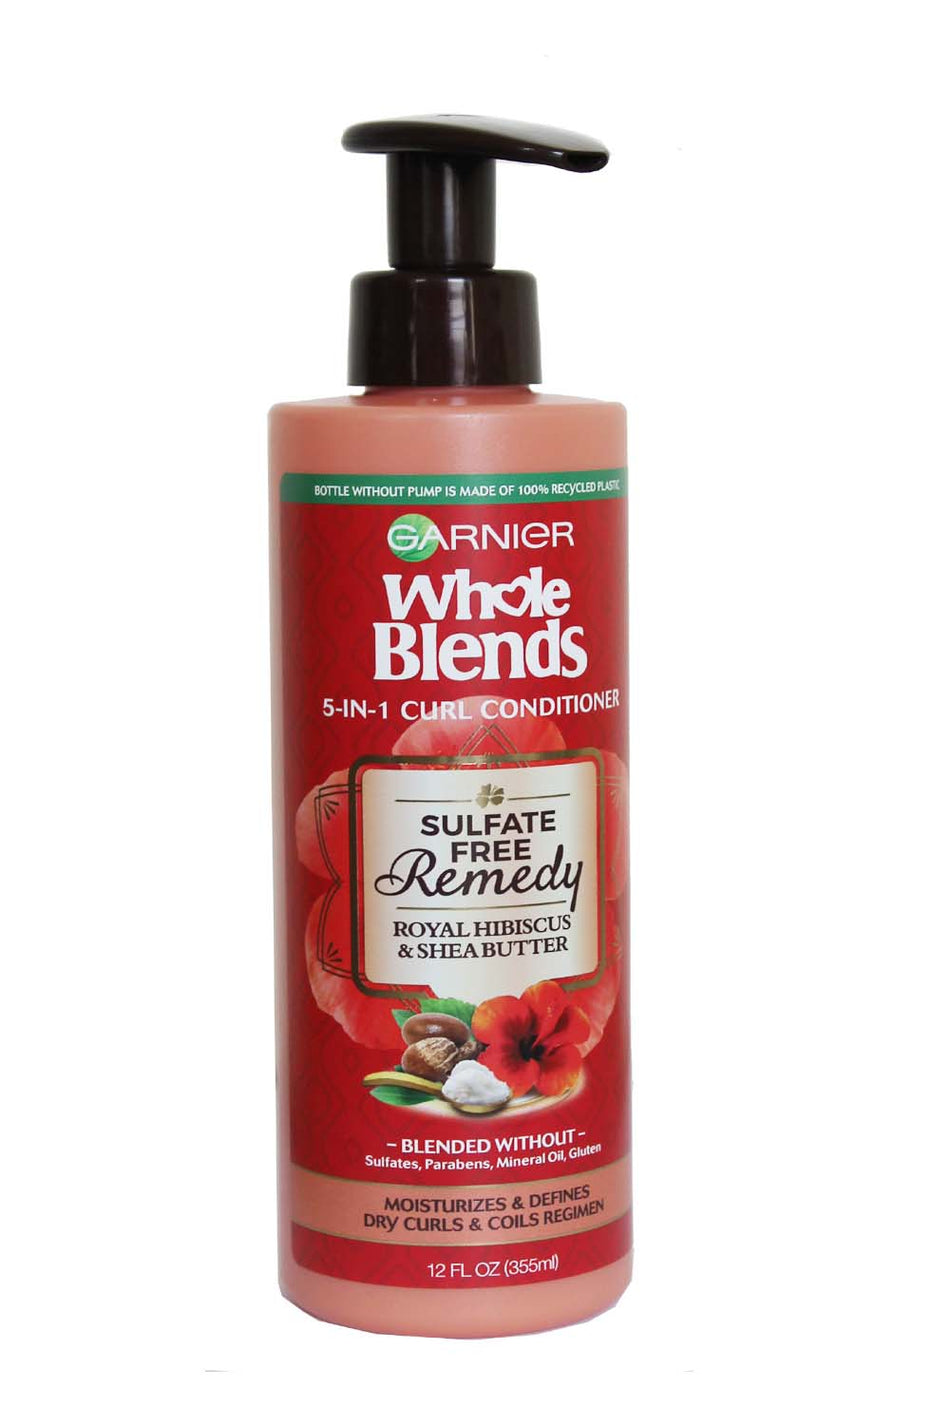 Garnier Whole Blends Sulfate Free Remedy Conditioner & Shampoo